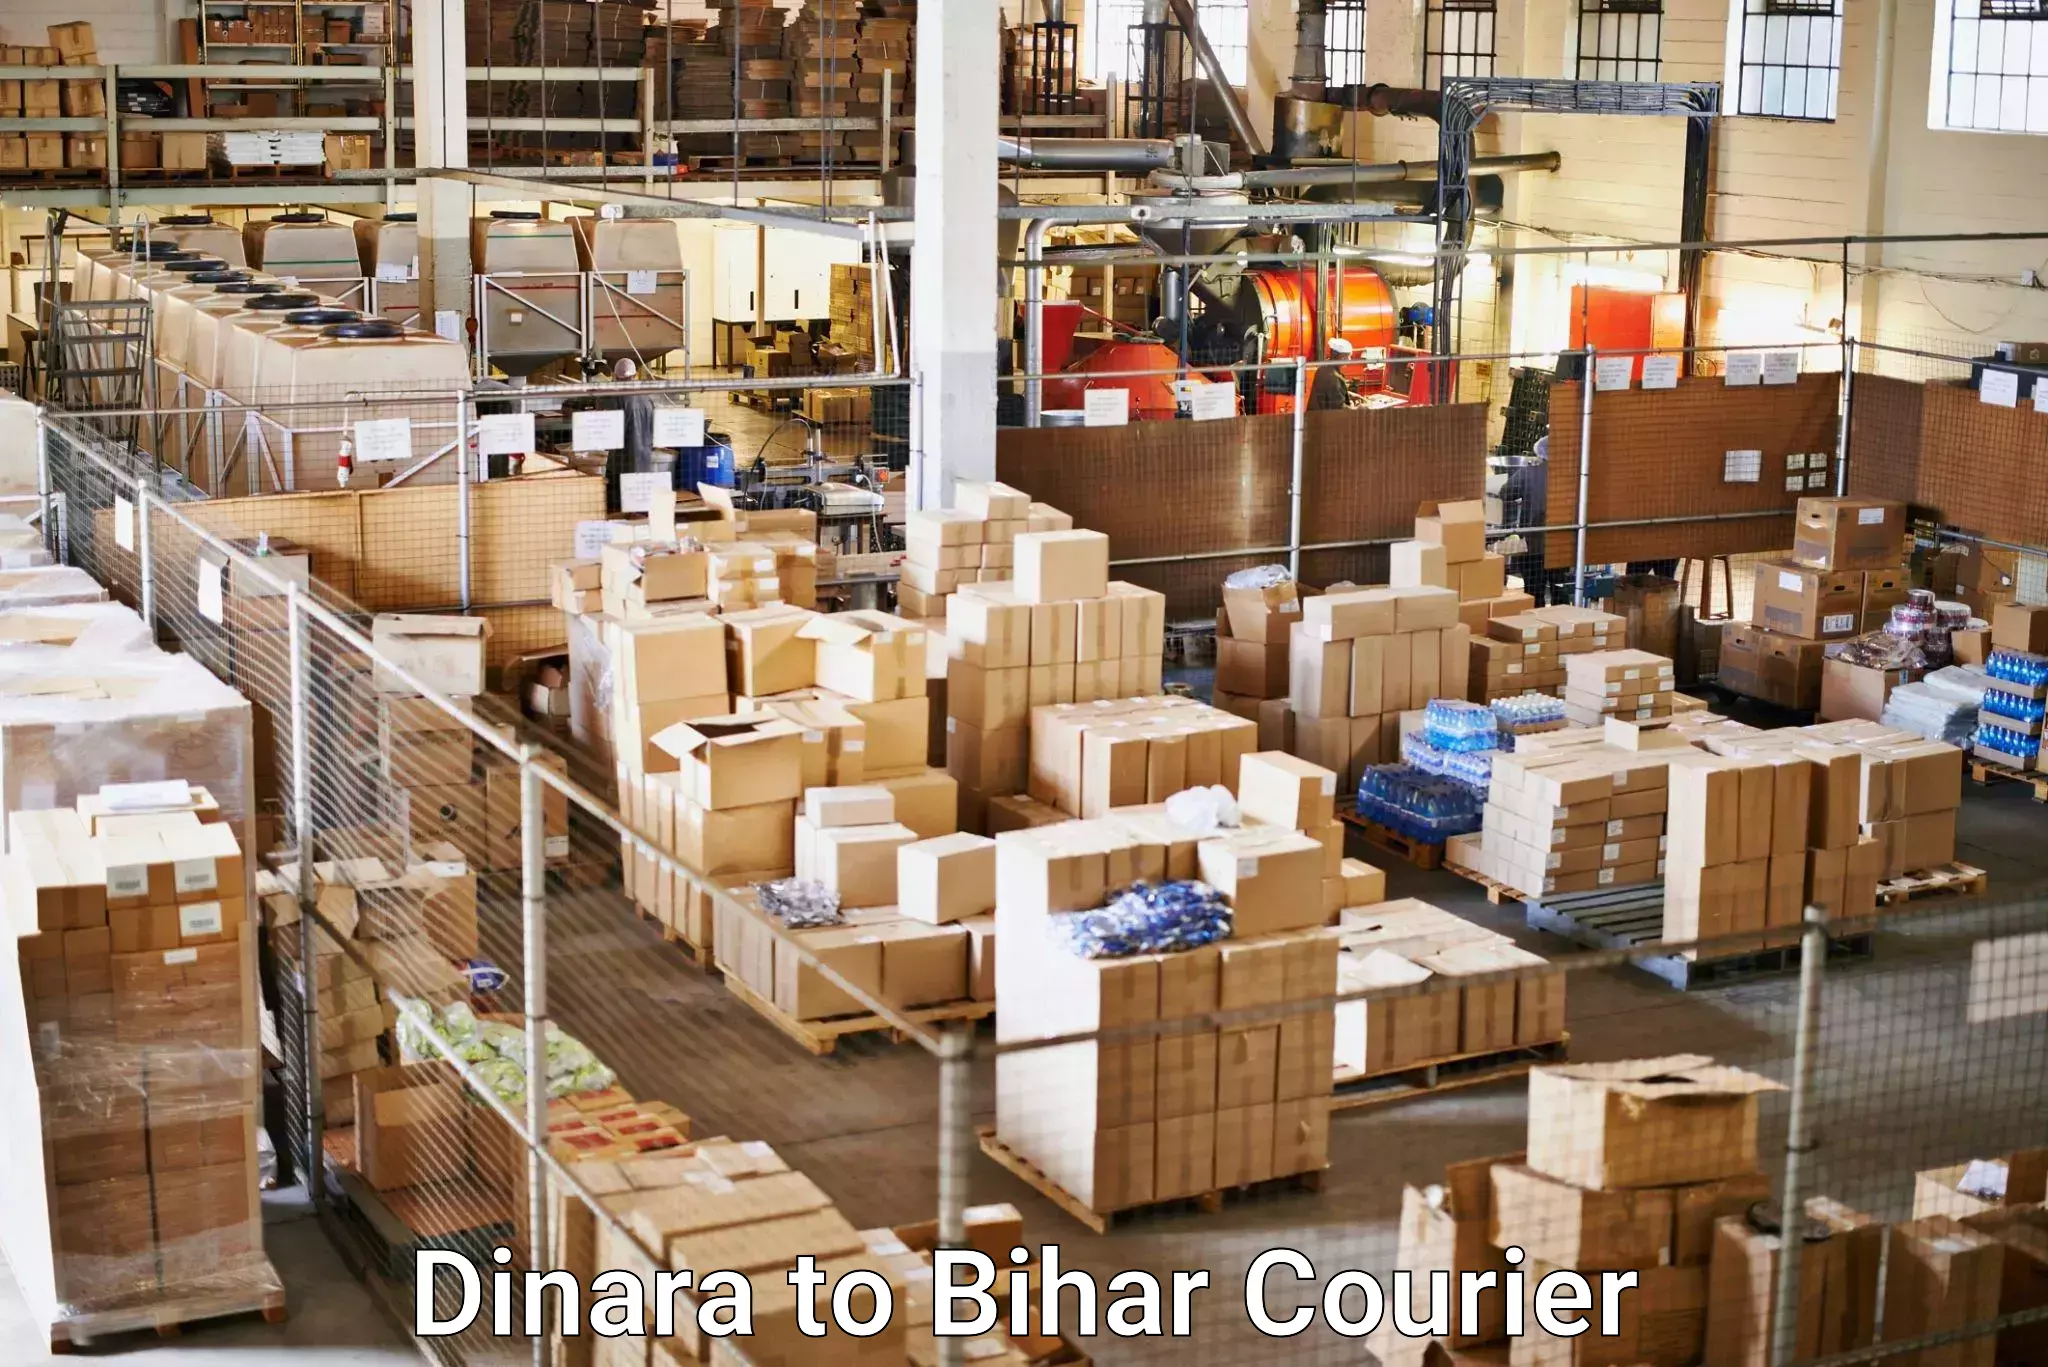 Global shipping networks Dinara to Manjhaul